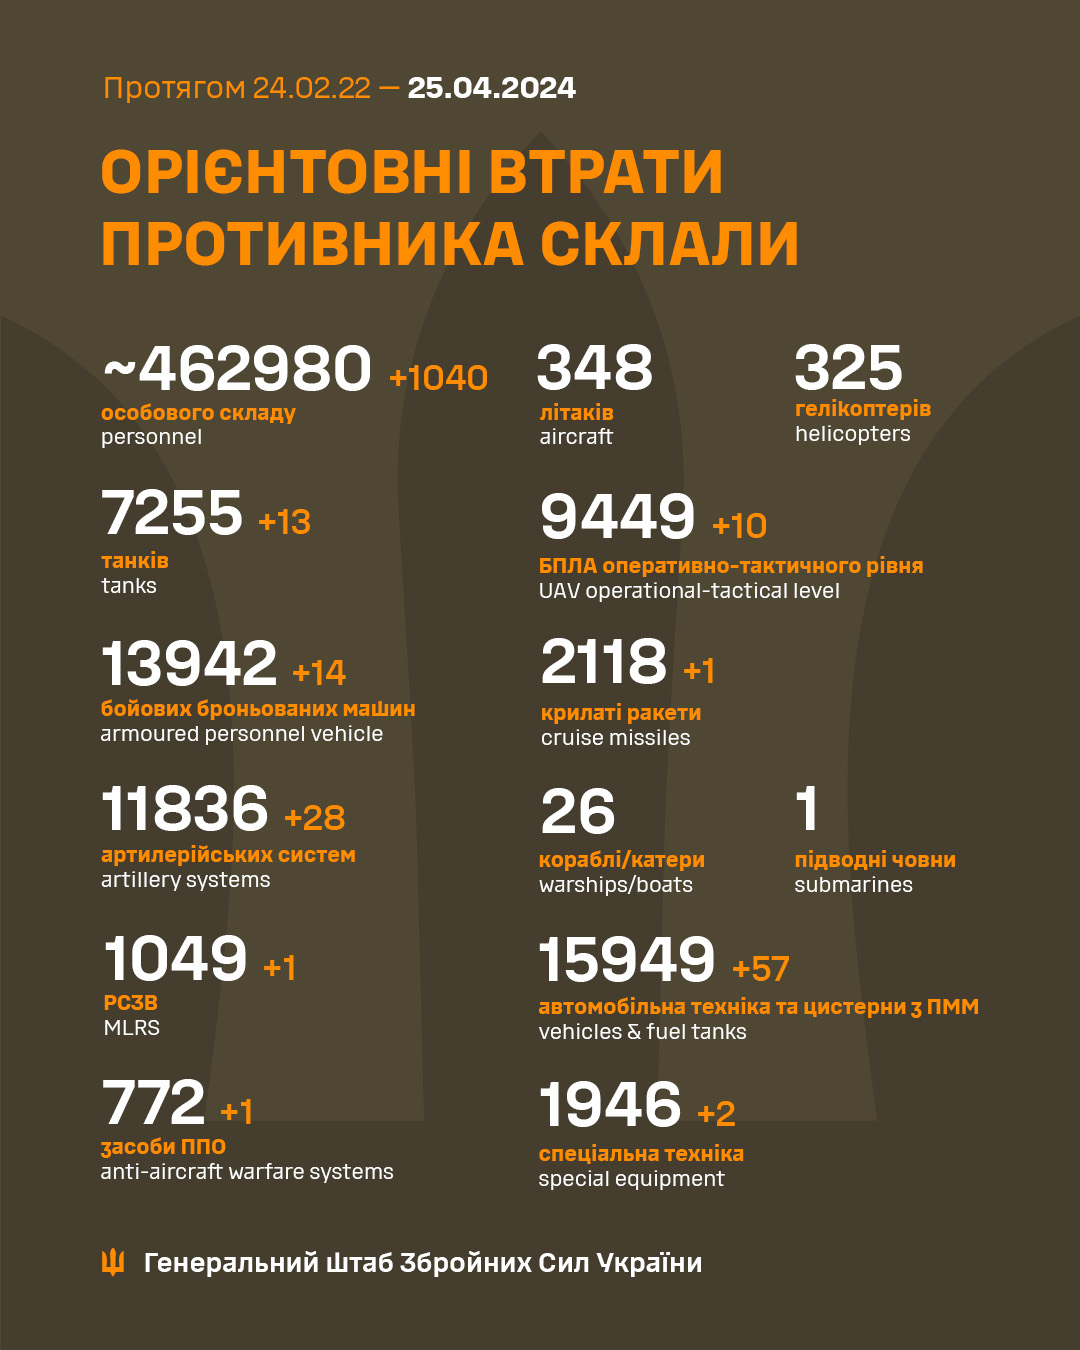 Потери армии РФ на 25 апреля 2024 года